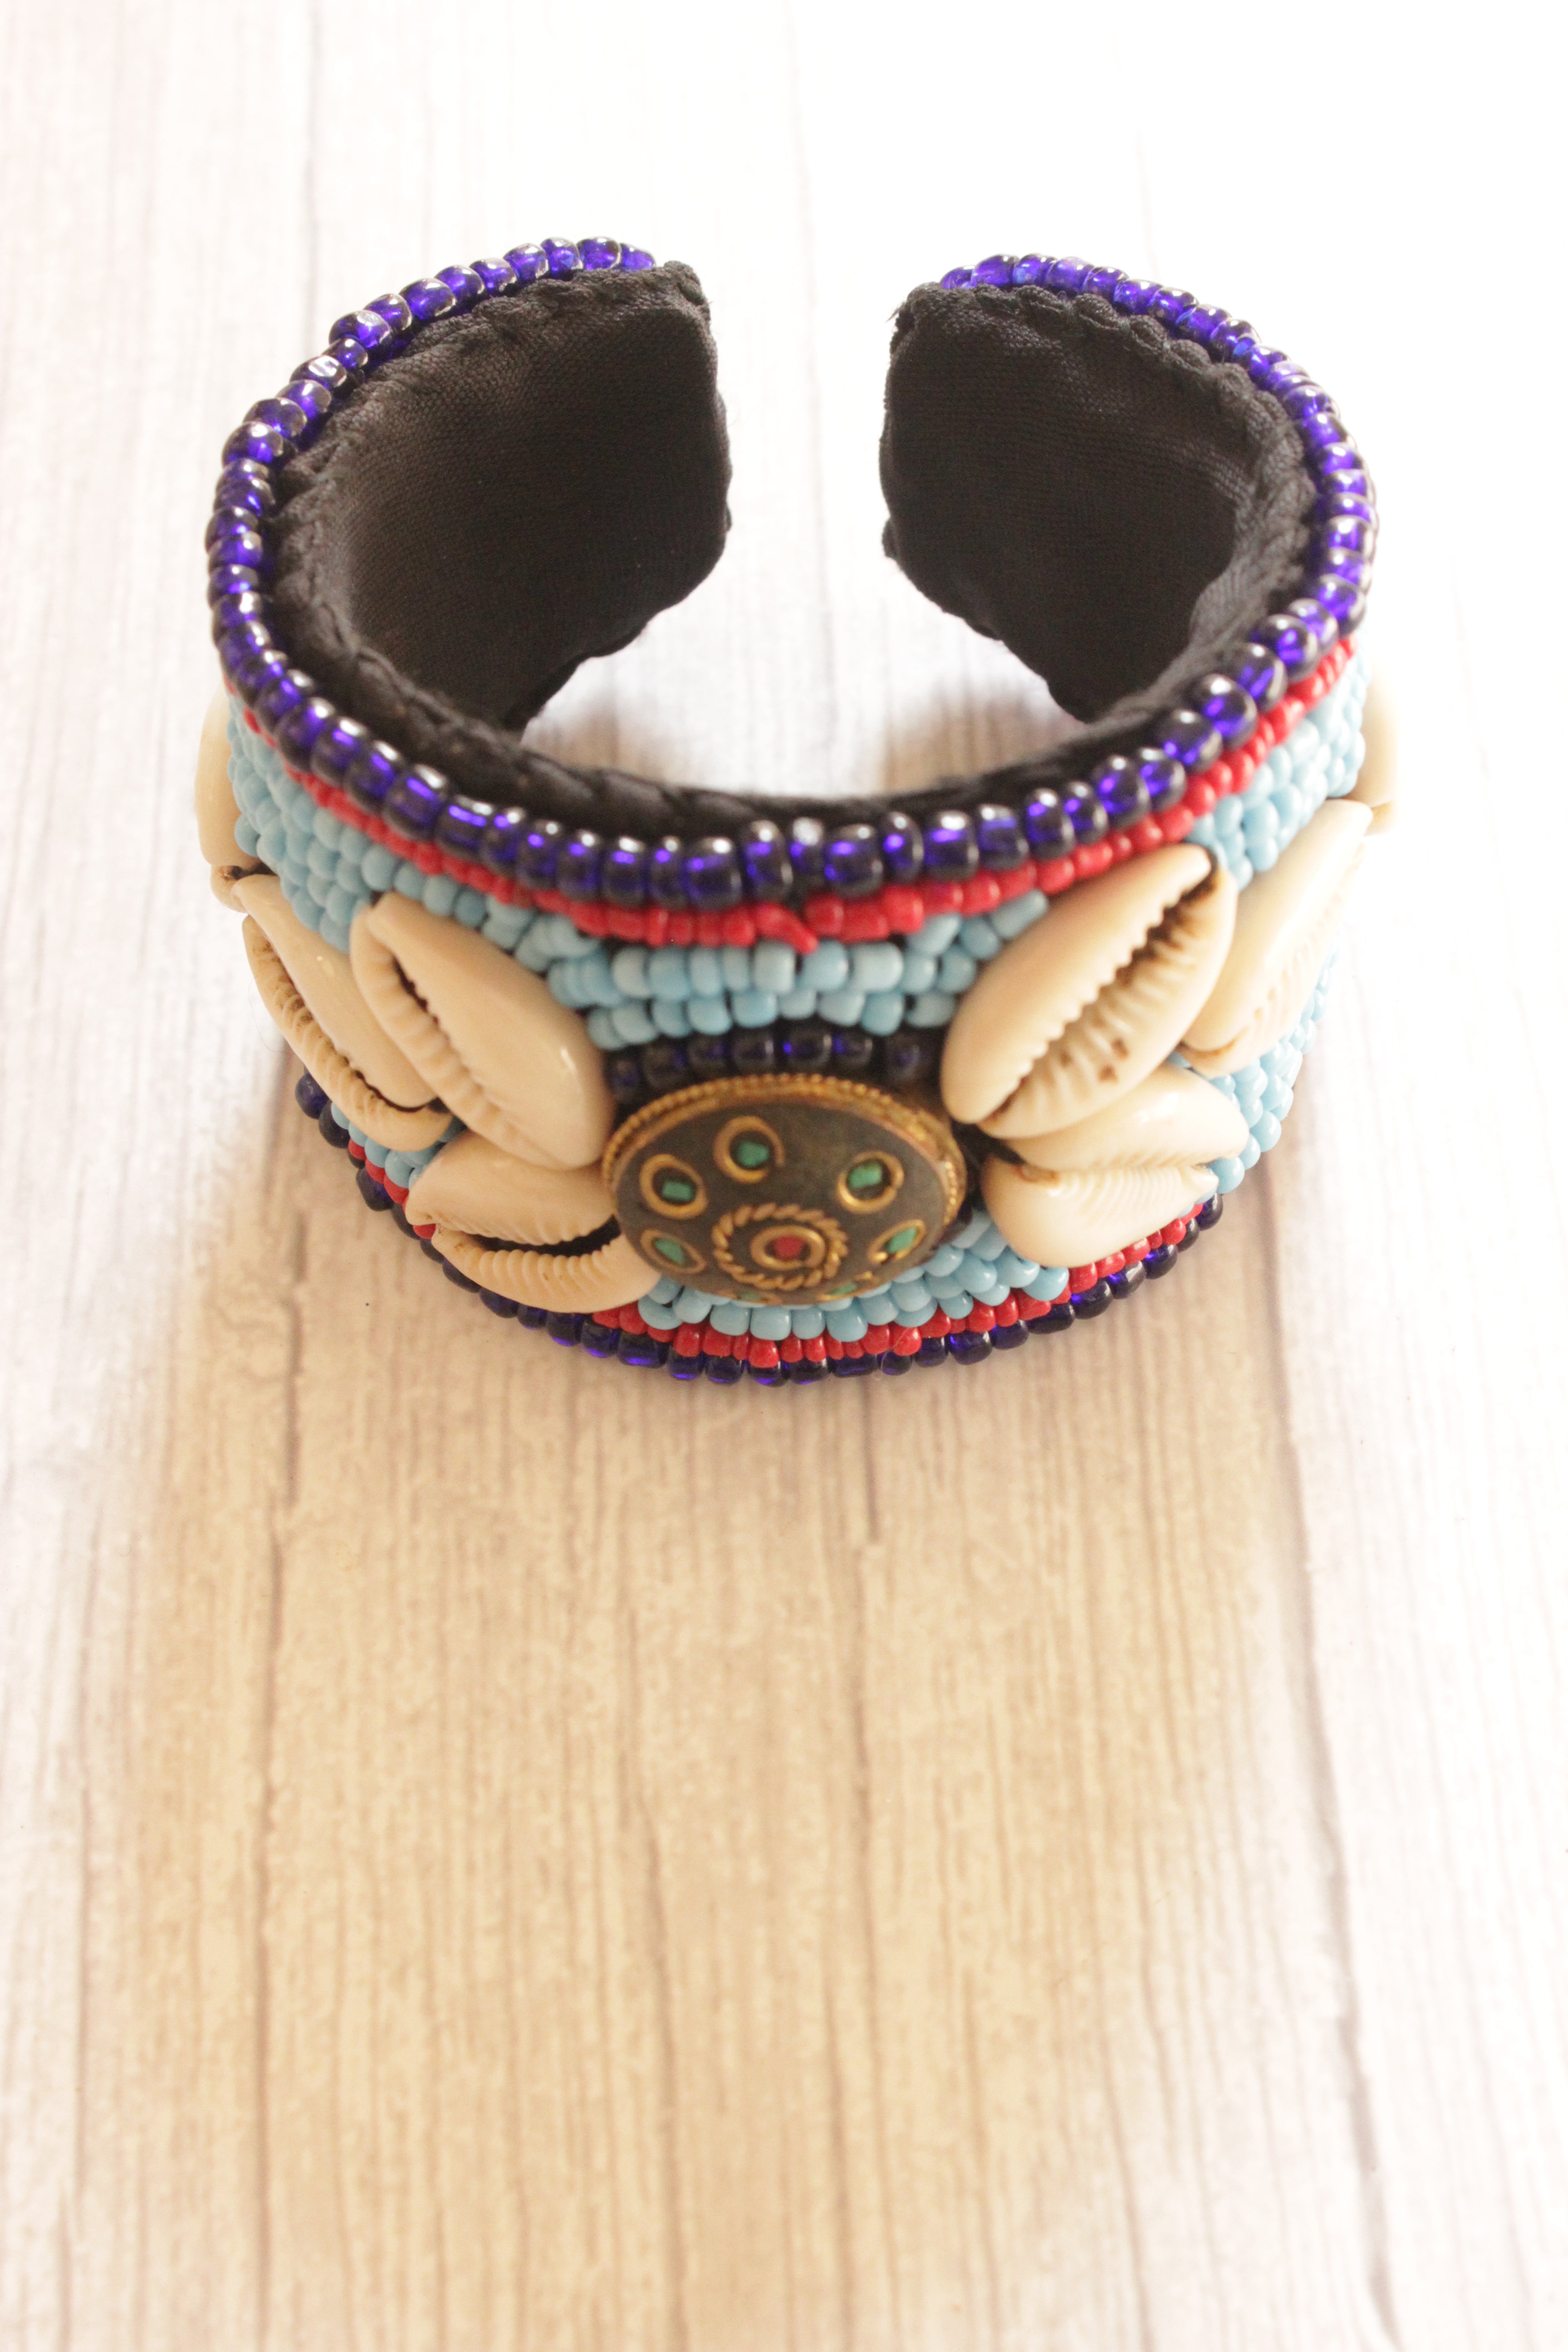 Beads and Shells Hand Woven Tibetan Bracelet